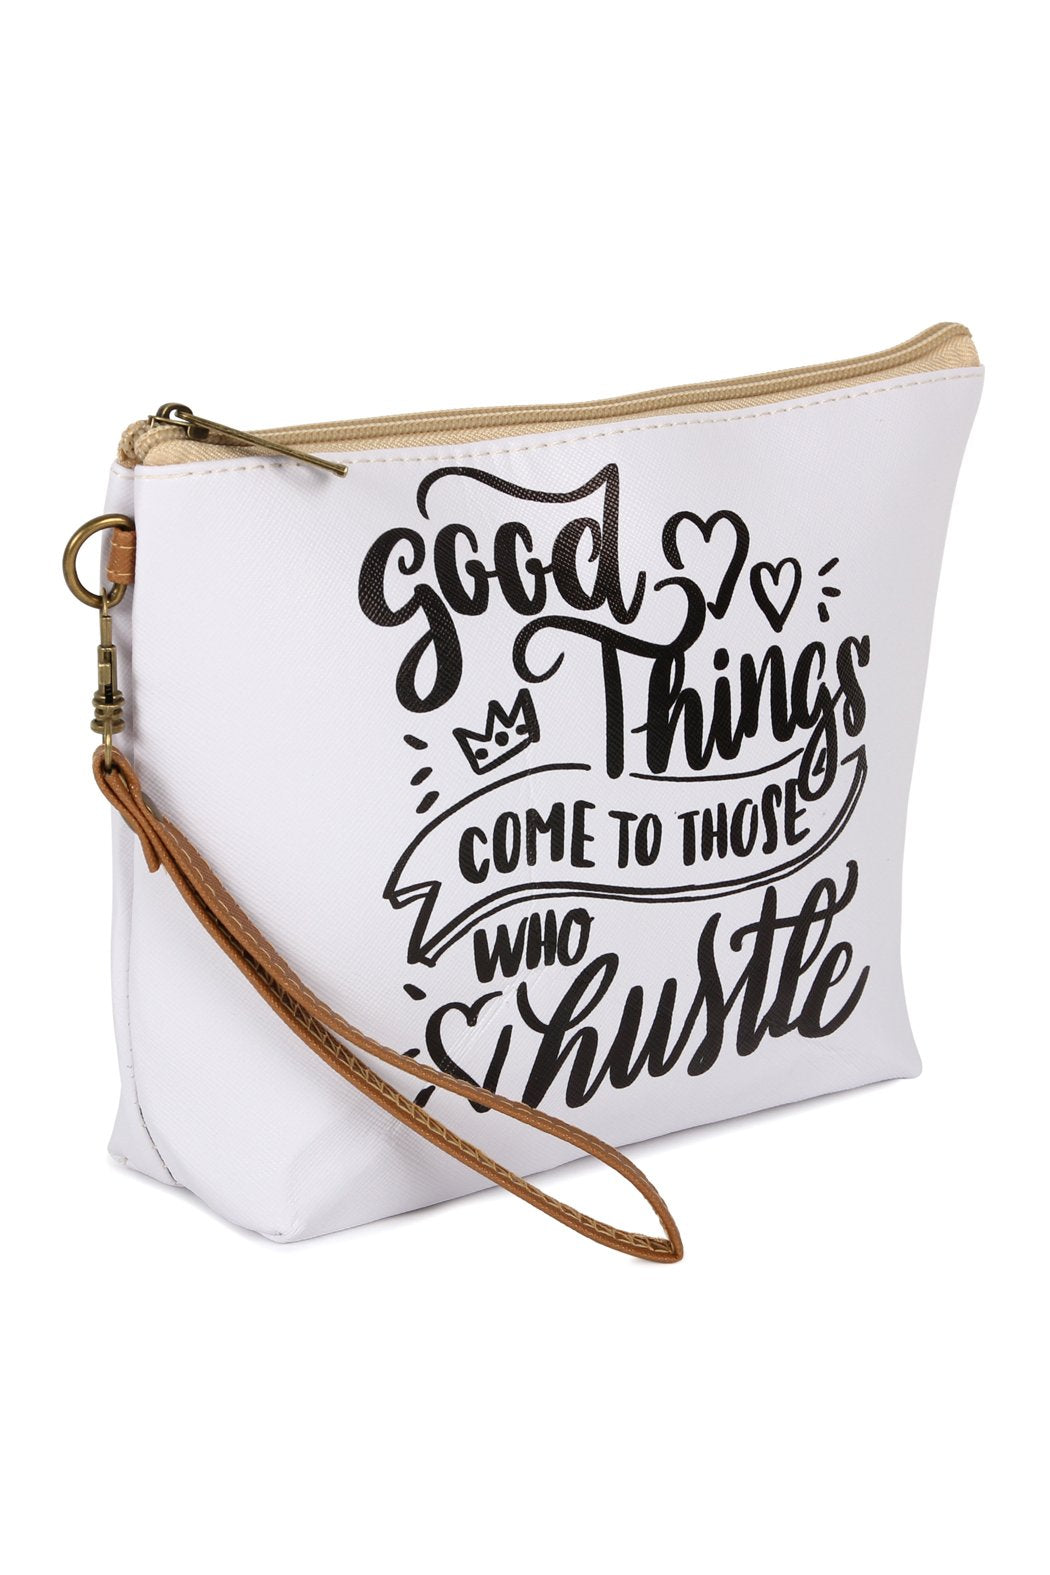 Hdg2470 - "Good Things" Cosmetic Bag